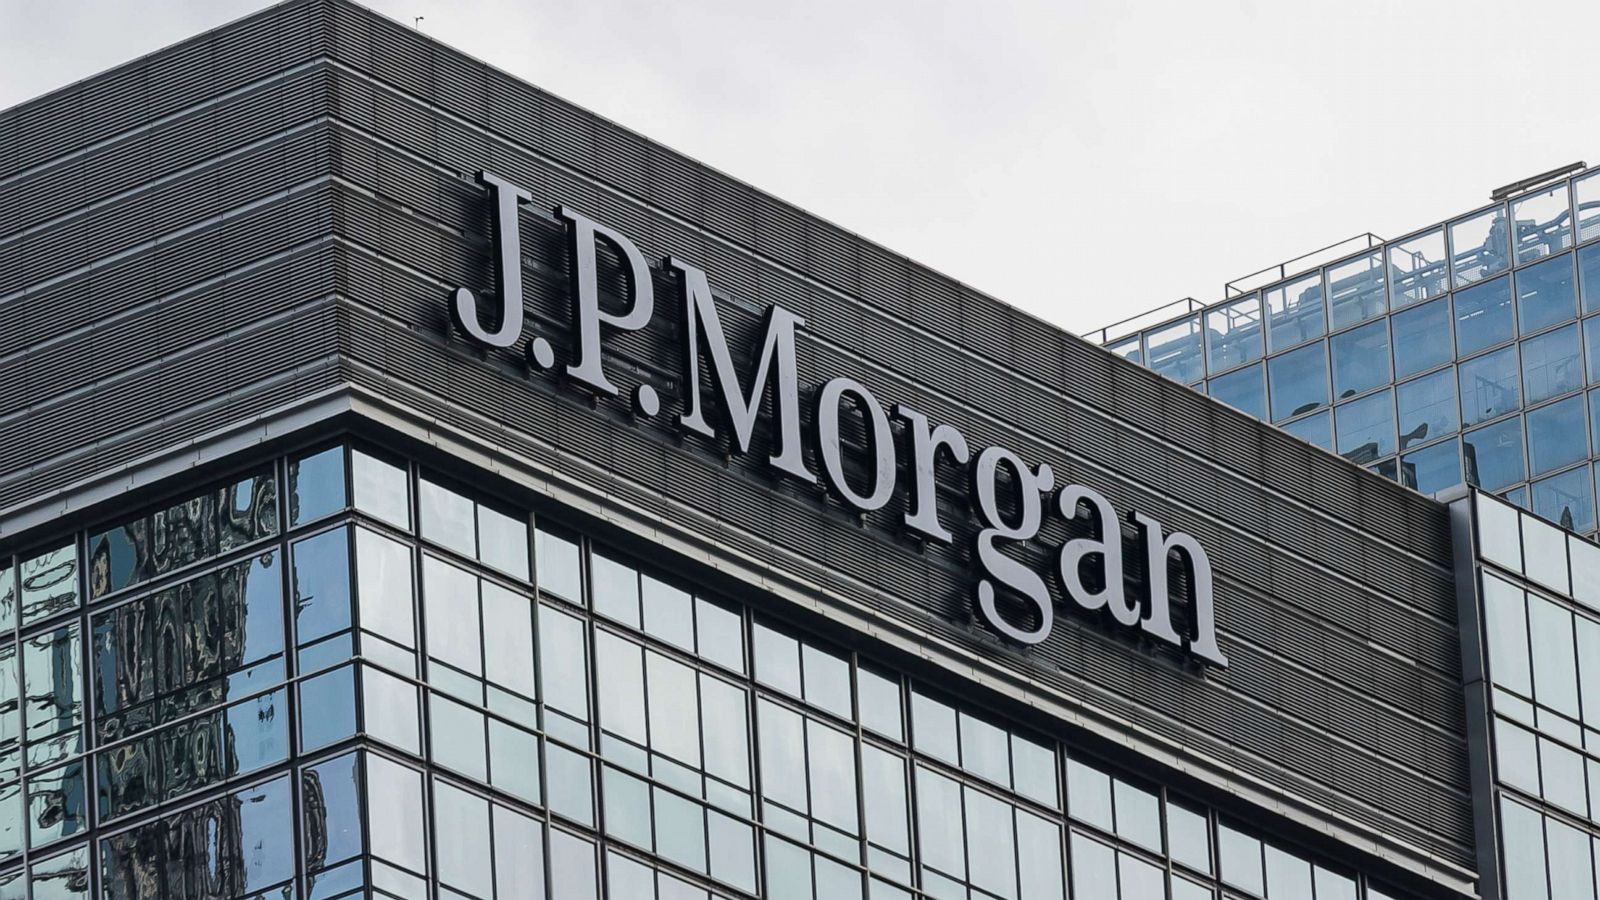 JP Morgan Chase Recruitment